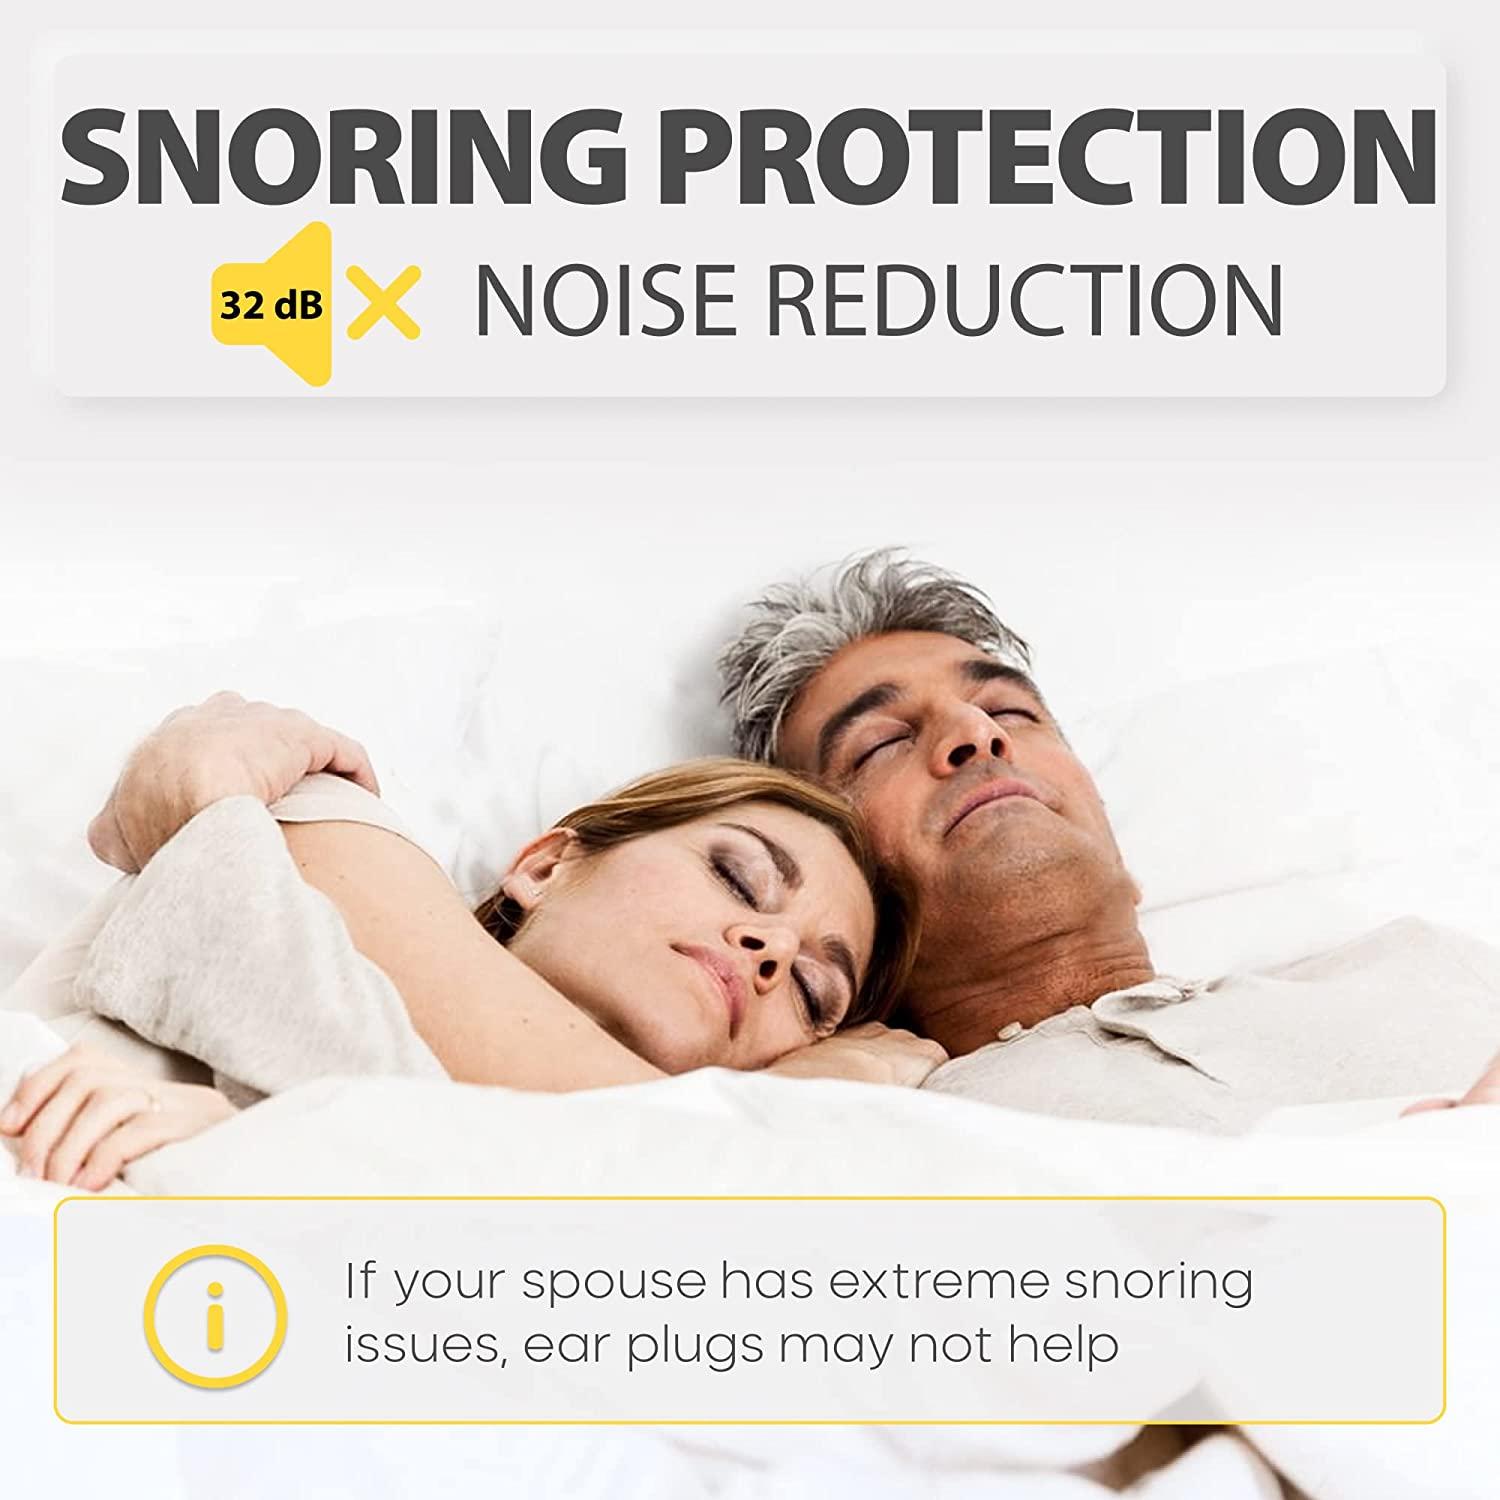  PQ Wax Ear Plugs for Sleeping - 28 Silicone Wax